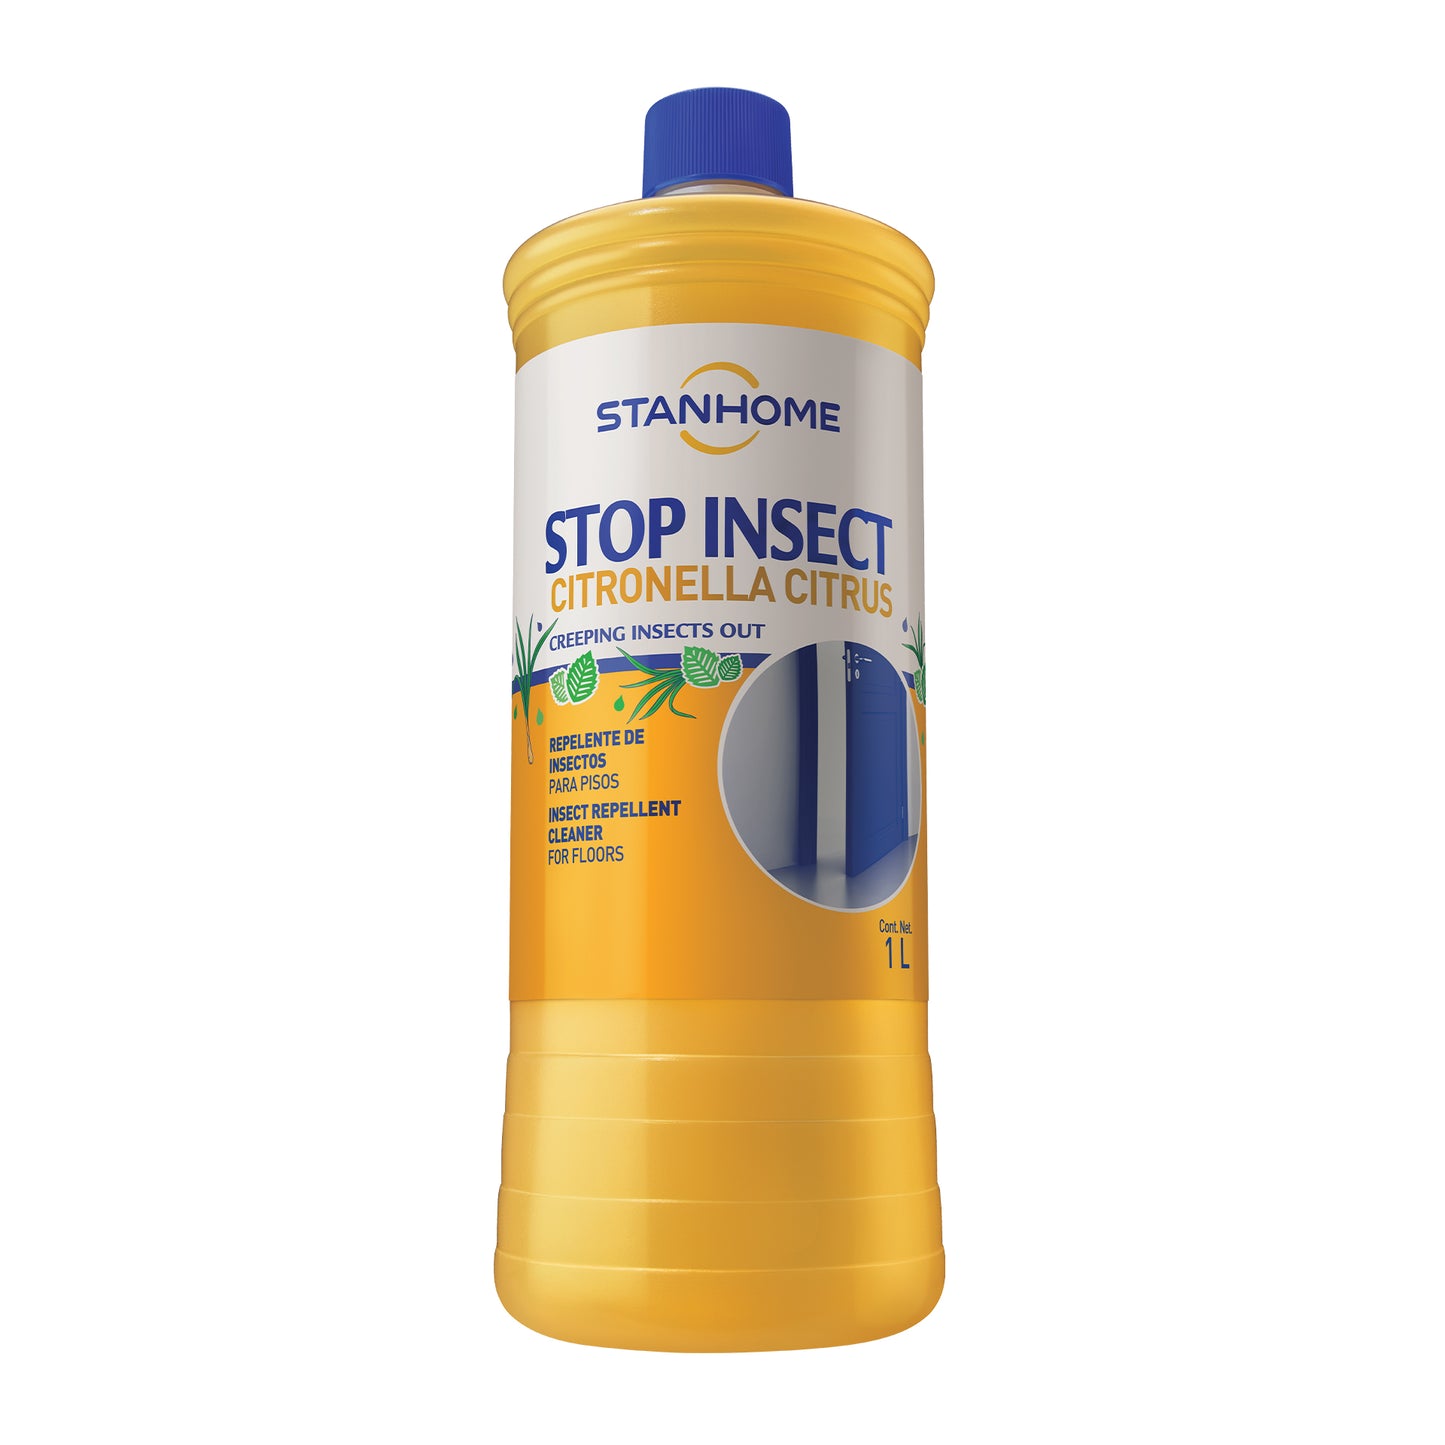 Stop Insect Citronella Citrus 1 L | Repelente de insectos para pisos